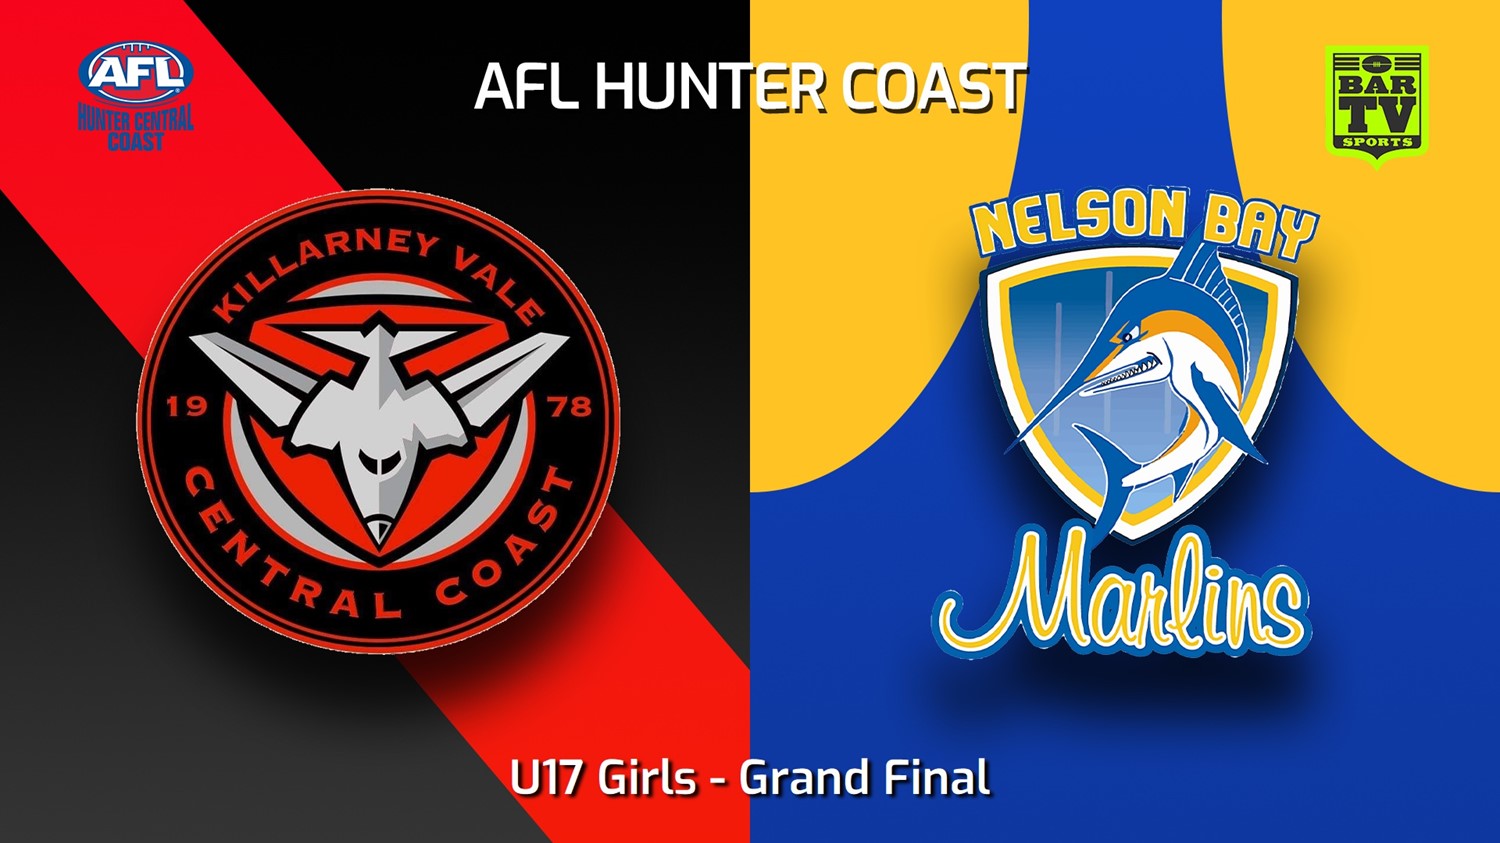 230903-AFL Hunter Central Coast Grand Final - U17 Girls - Killarney Vale Bombers v Nelson Bay Marlins Minigame Slate Image